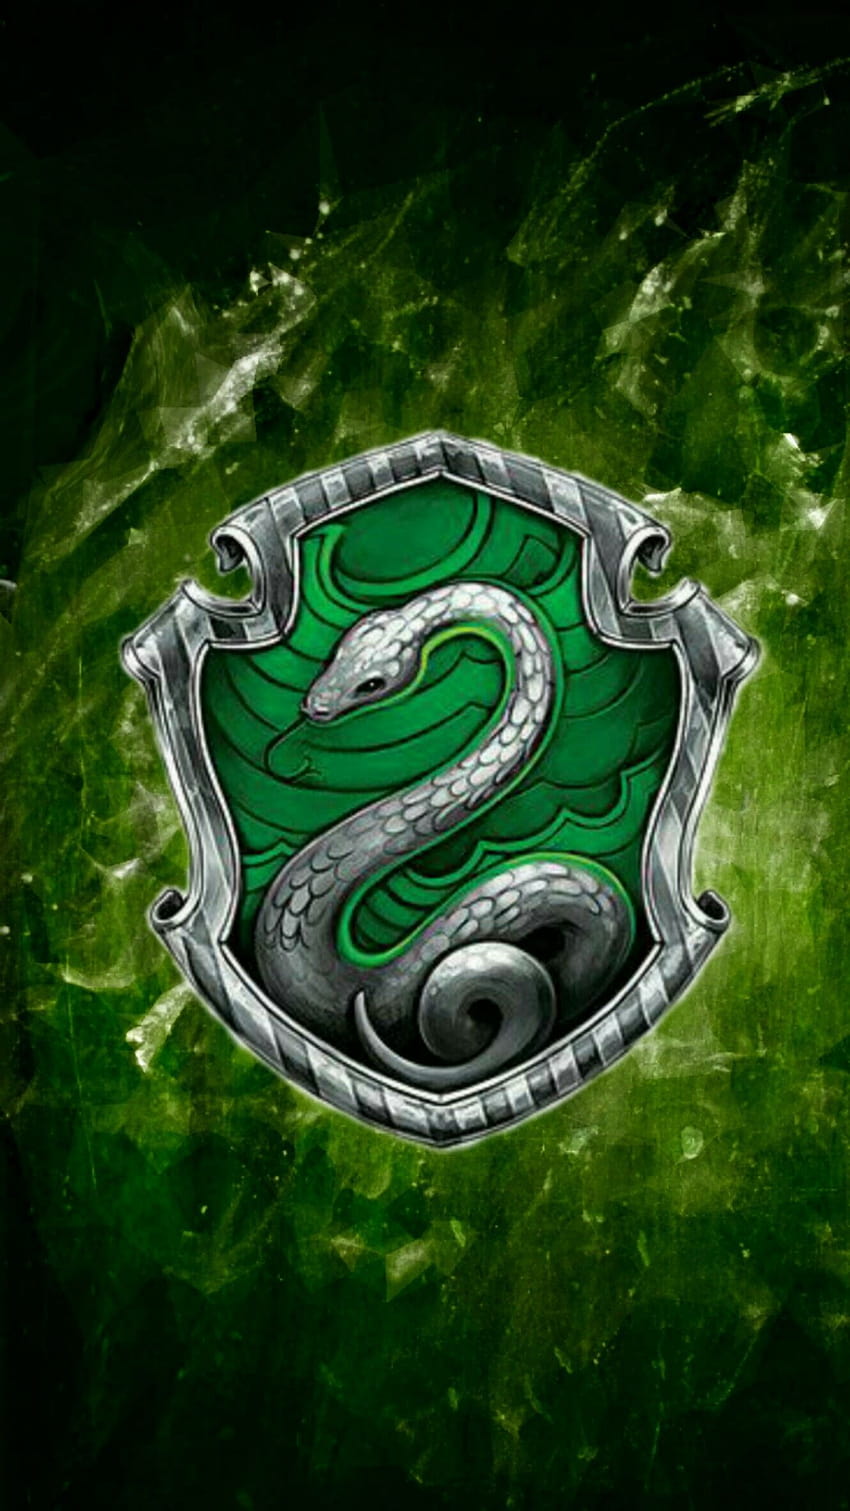 The harry potter logo on a green background - Slytherin